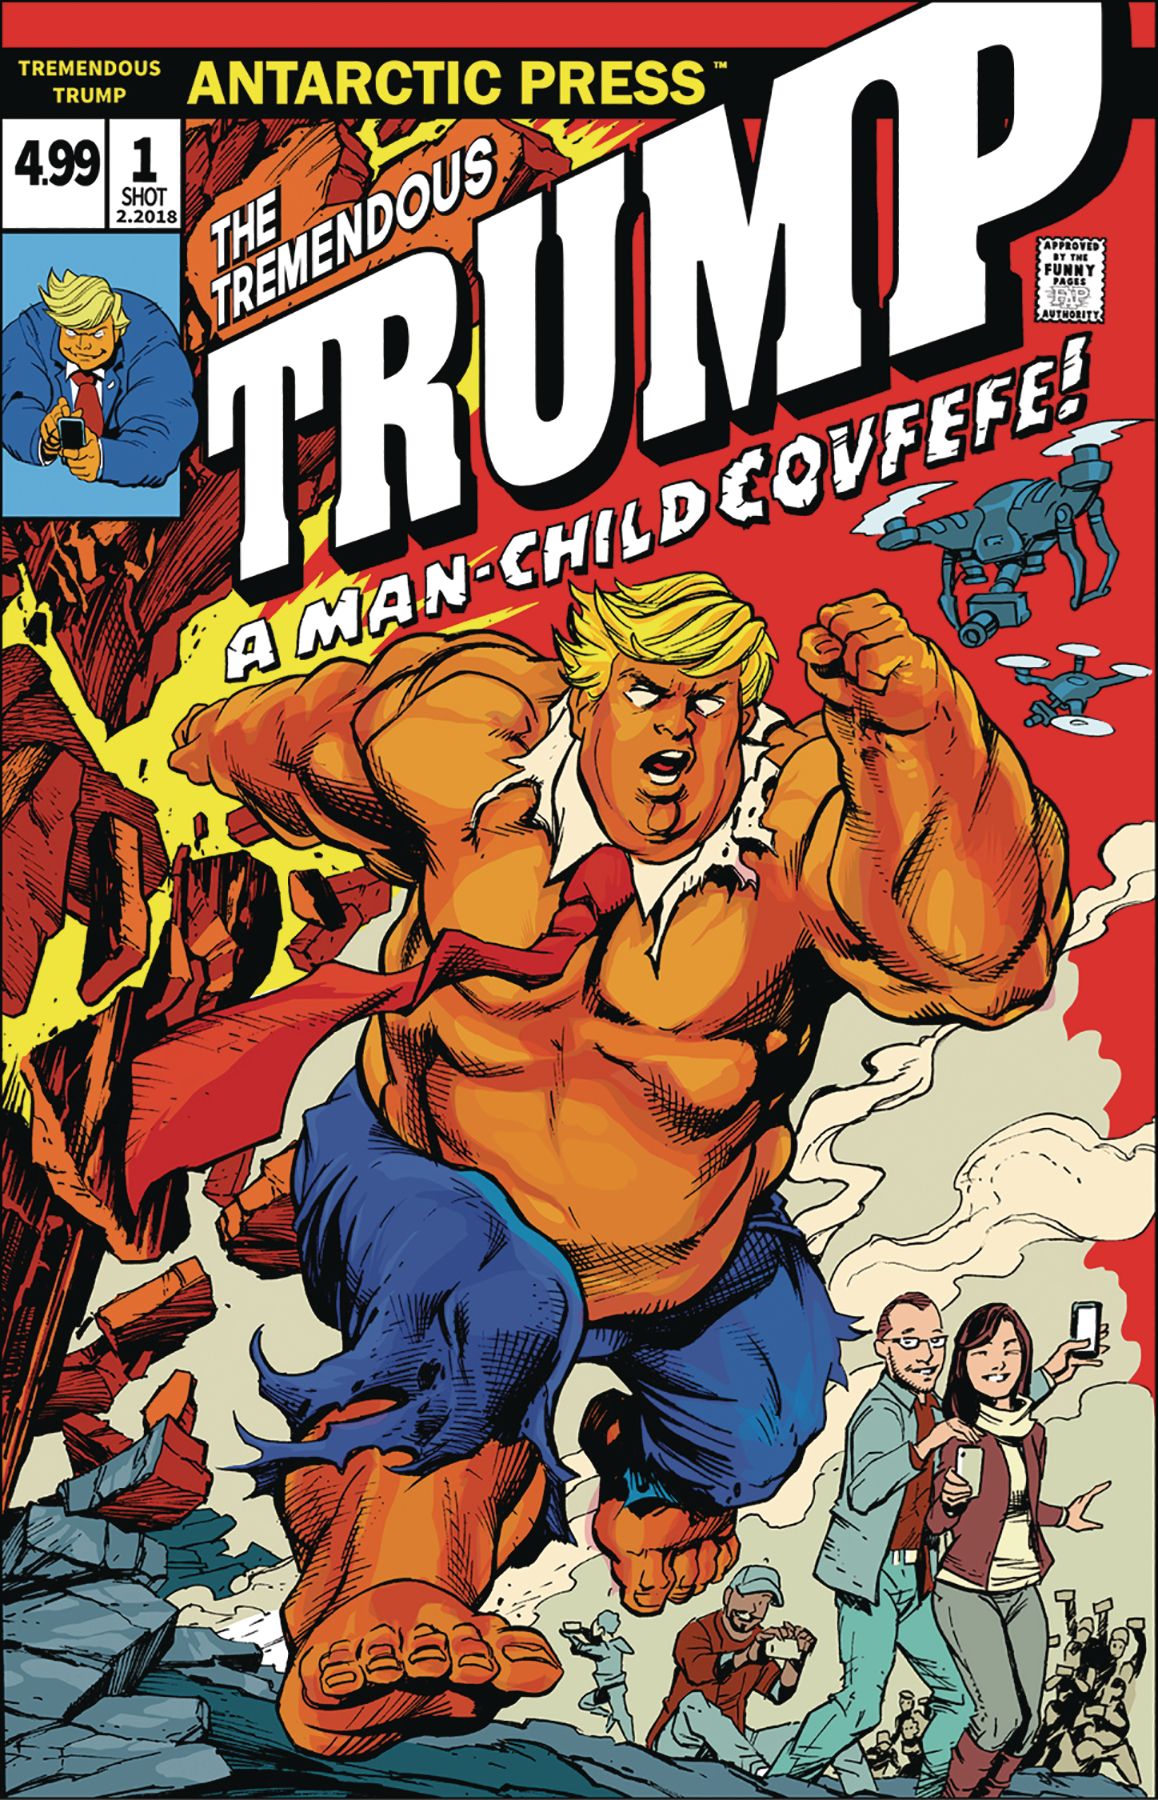 Tremendous Trump: A Man-Child Covfefe #? Comic